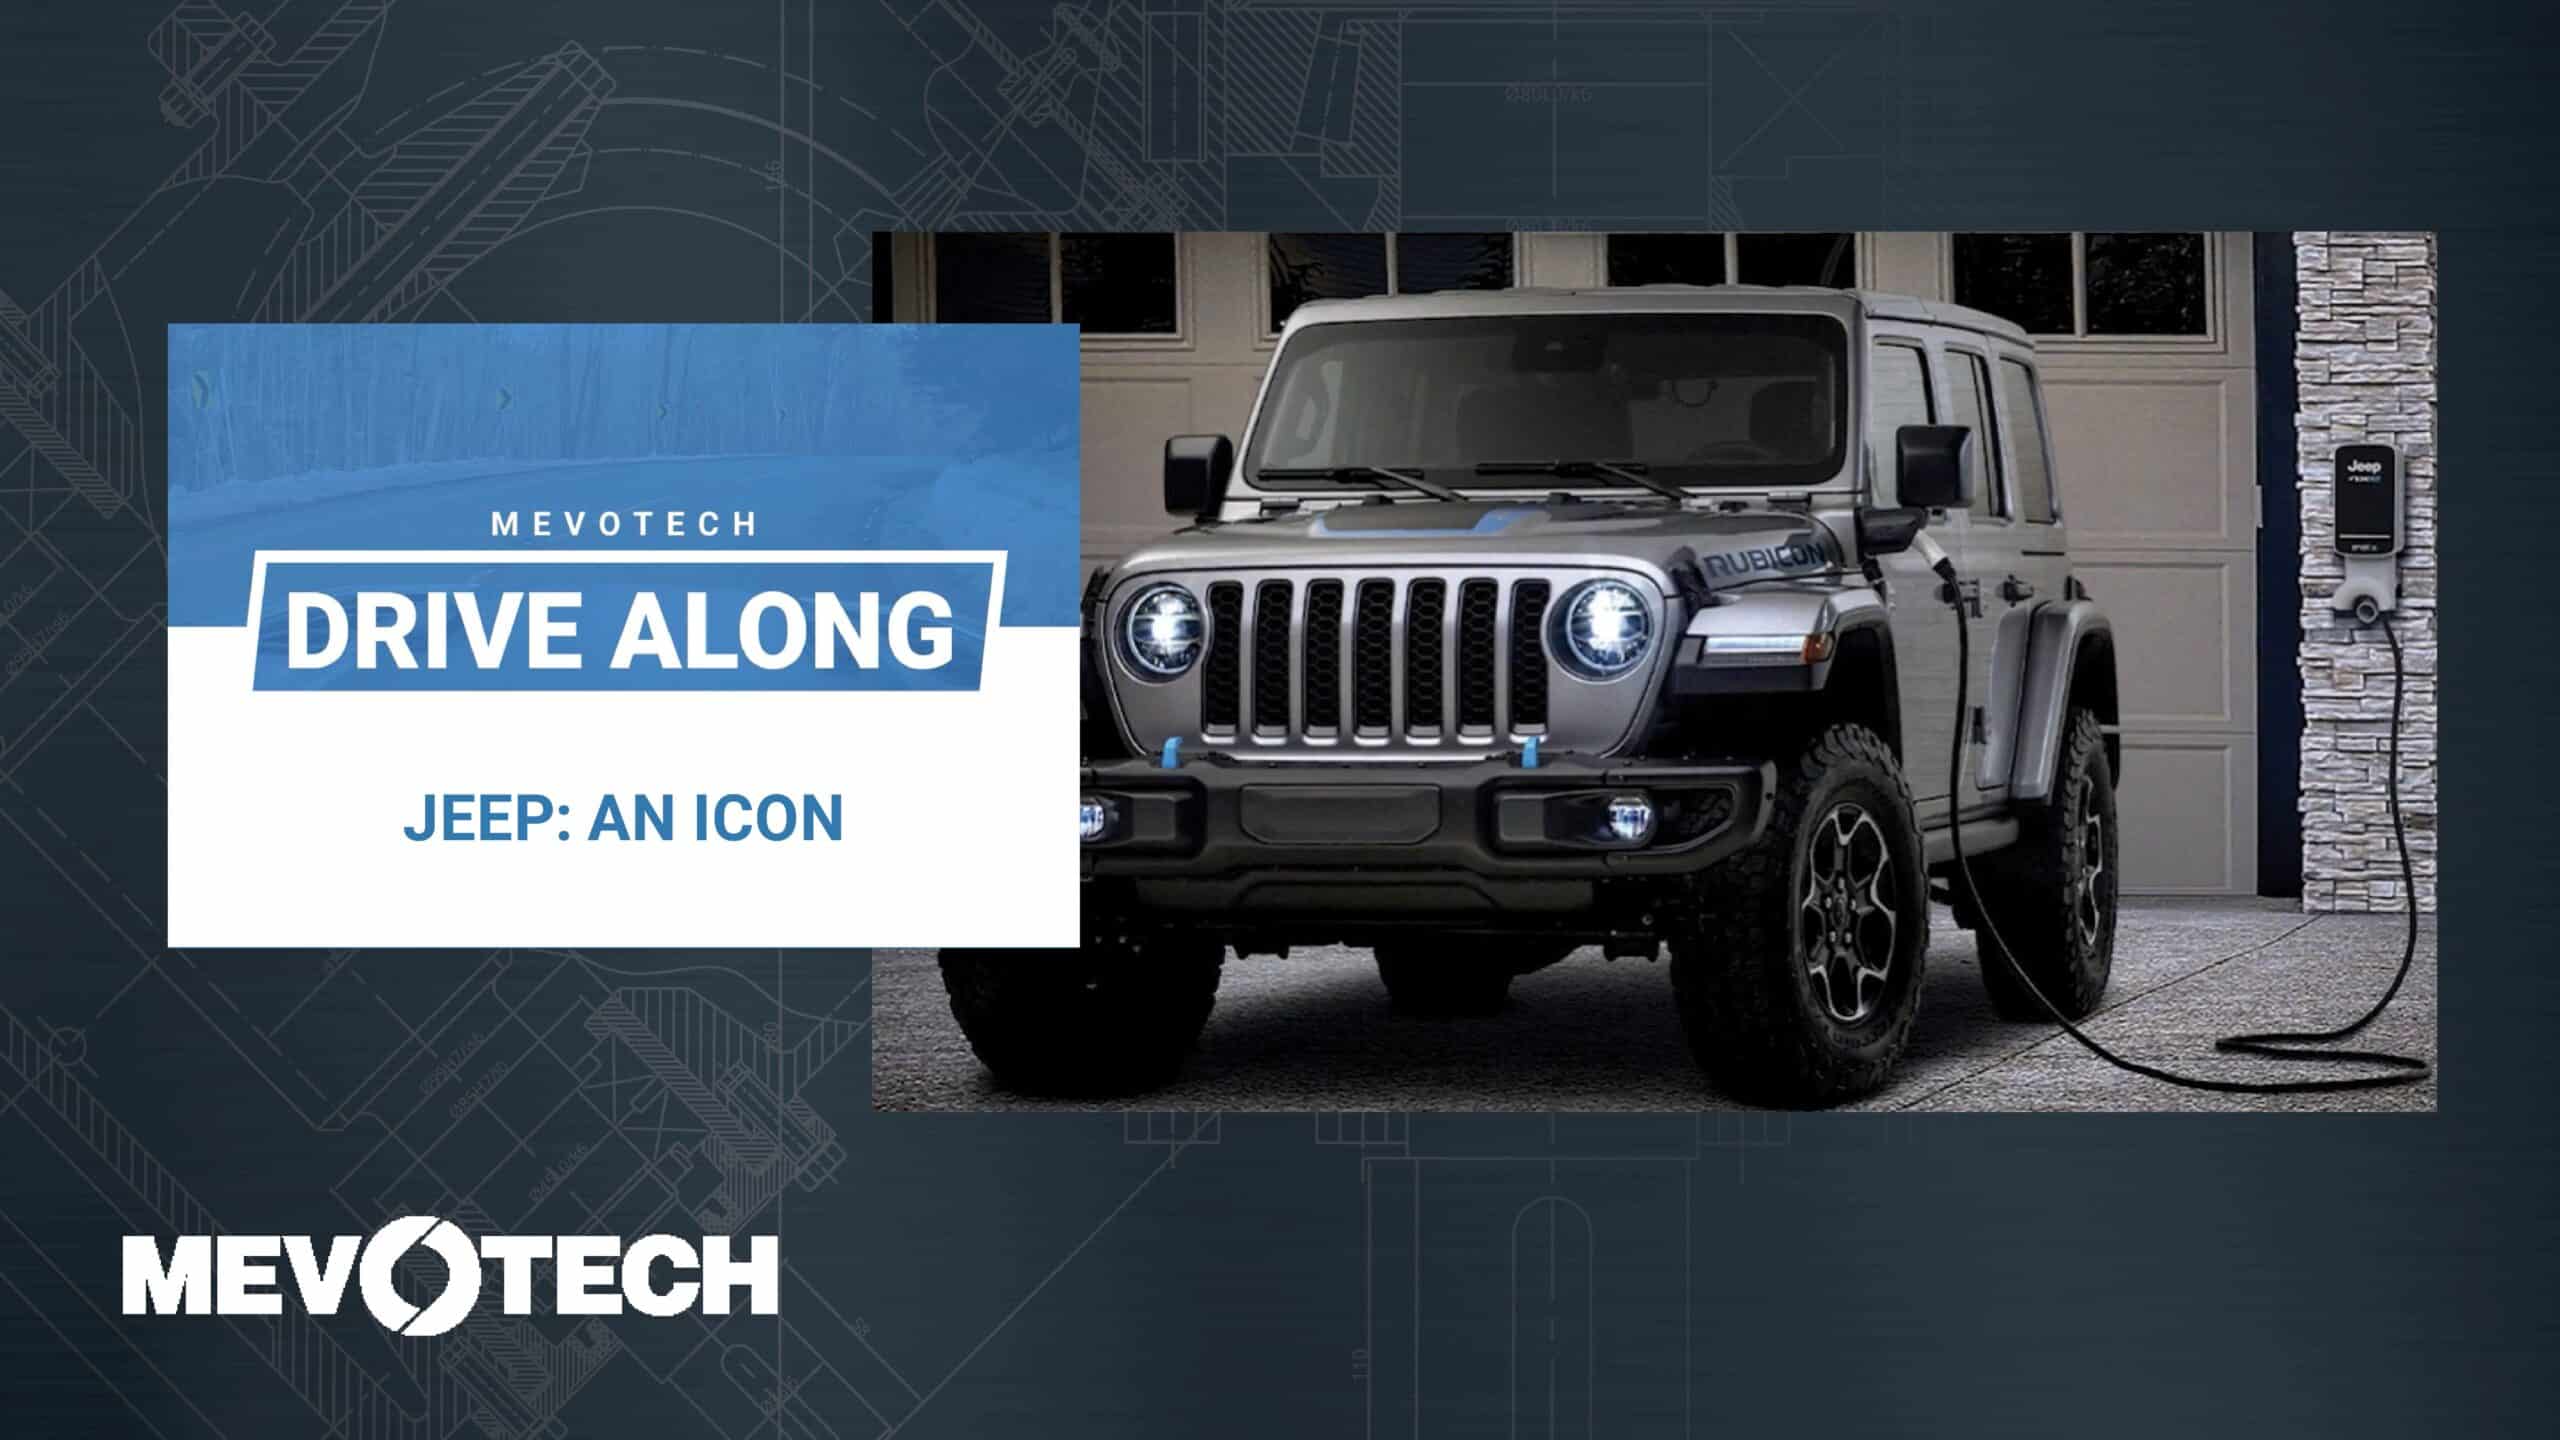 Mevotech Ride Along-Jeep: An Icon